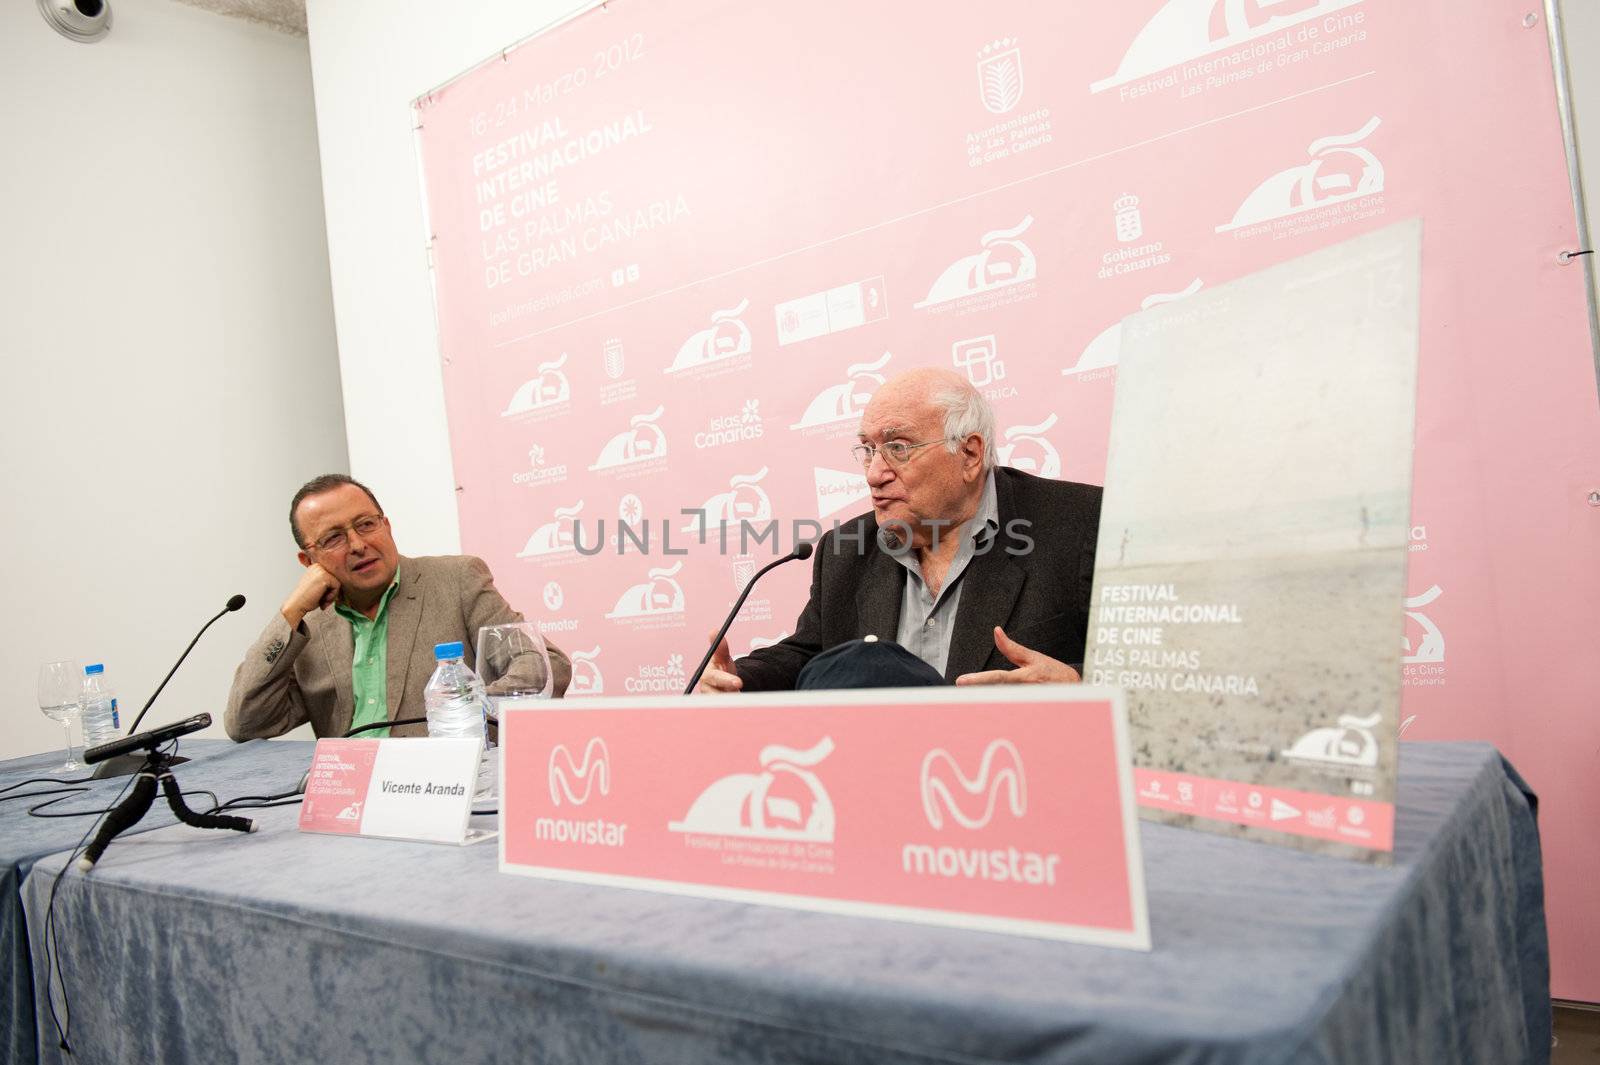 LAS PALMAS, SPAIN–MARCH 20: Film director Vicente Aranda(r), from Barcelona, and
Claudio Utrera(l), from Canary Islands, during LPA International Film Festival on March 20, 2012 in Las Palmas, Spain